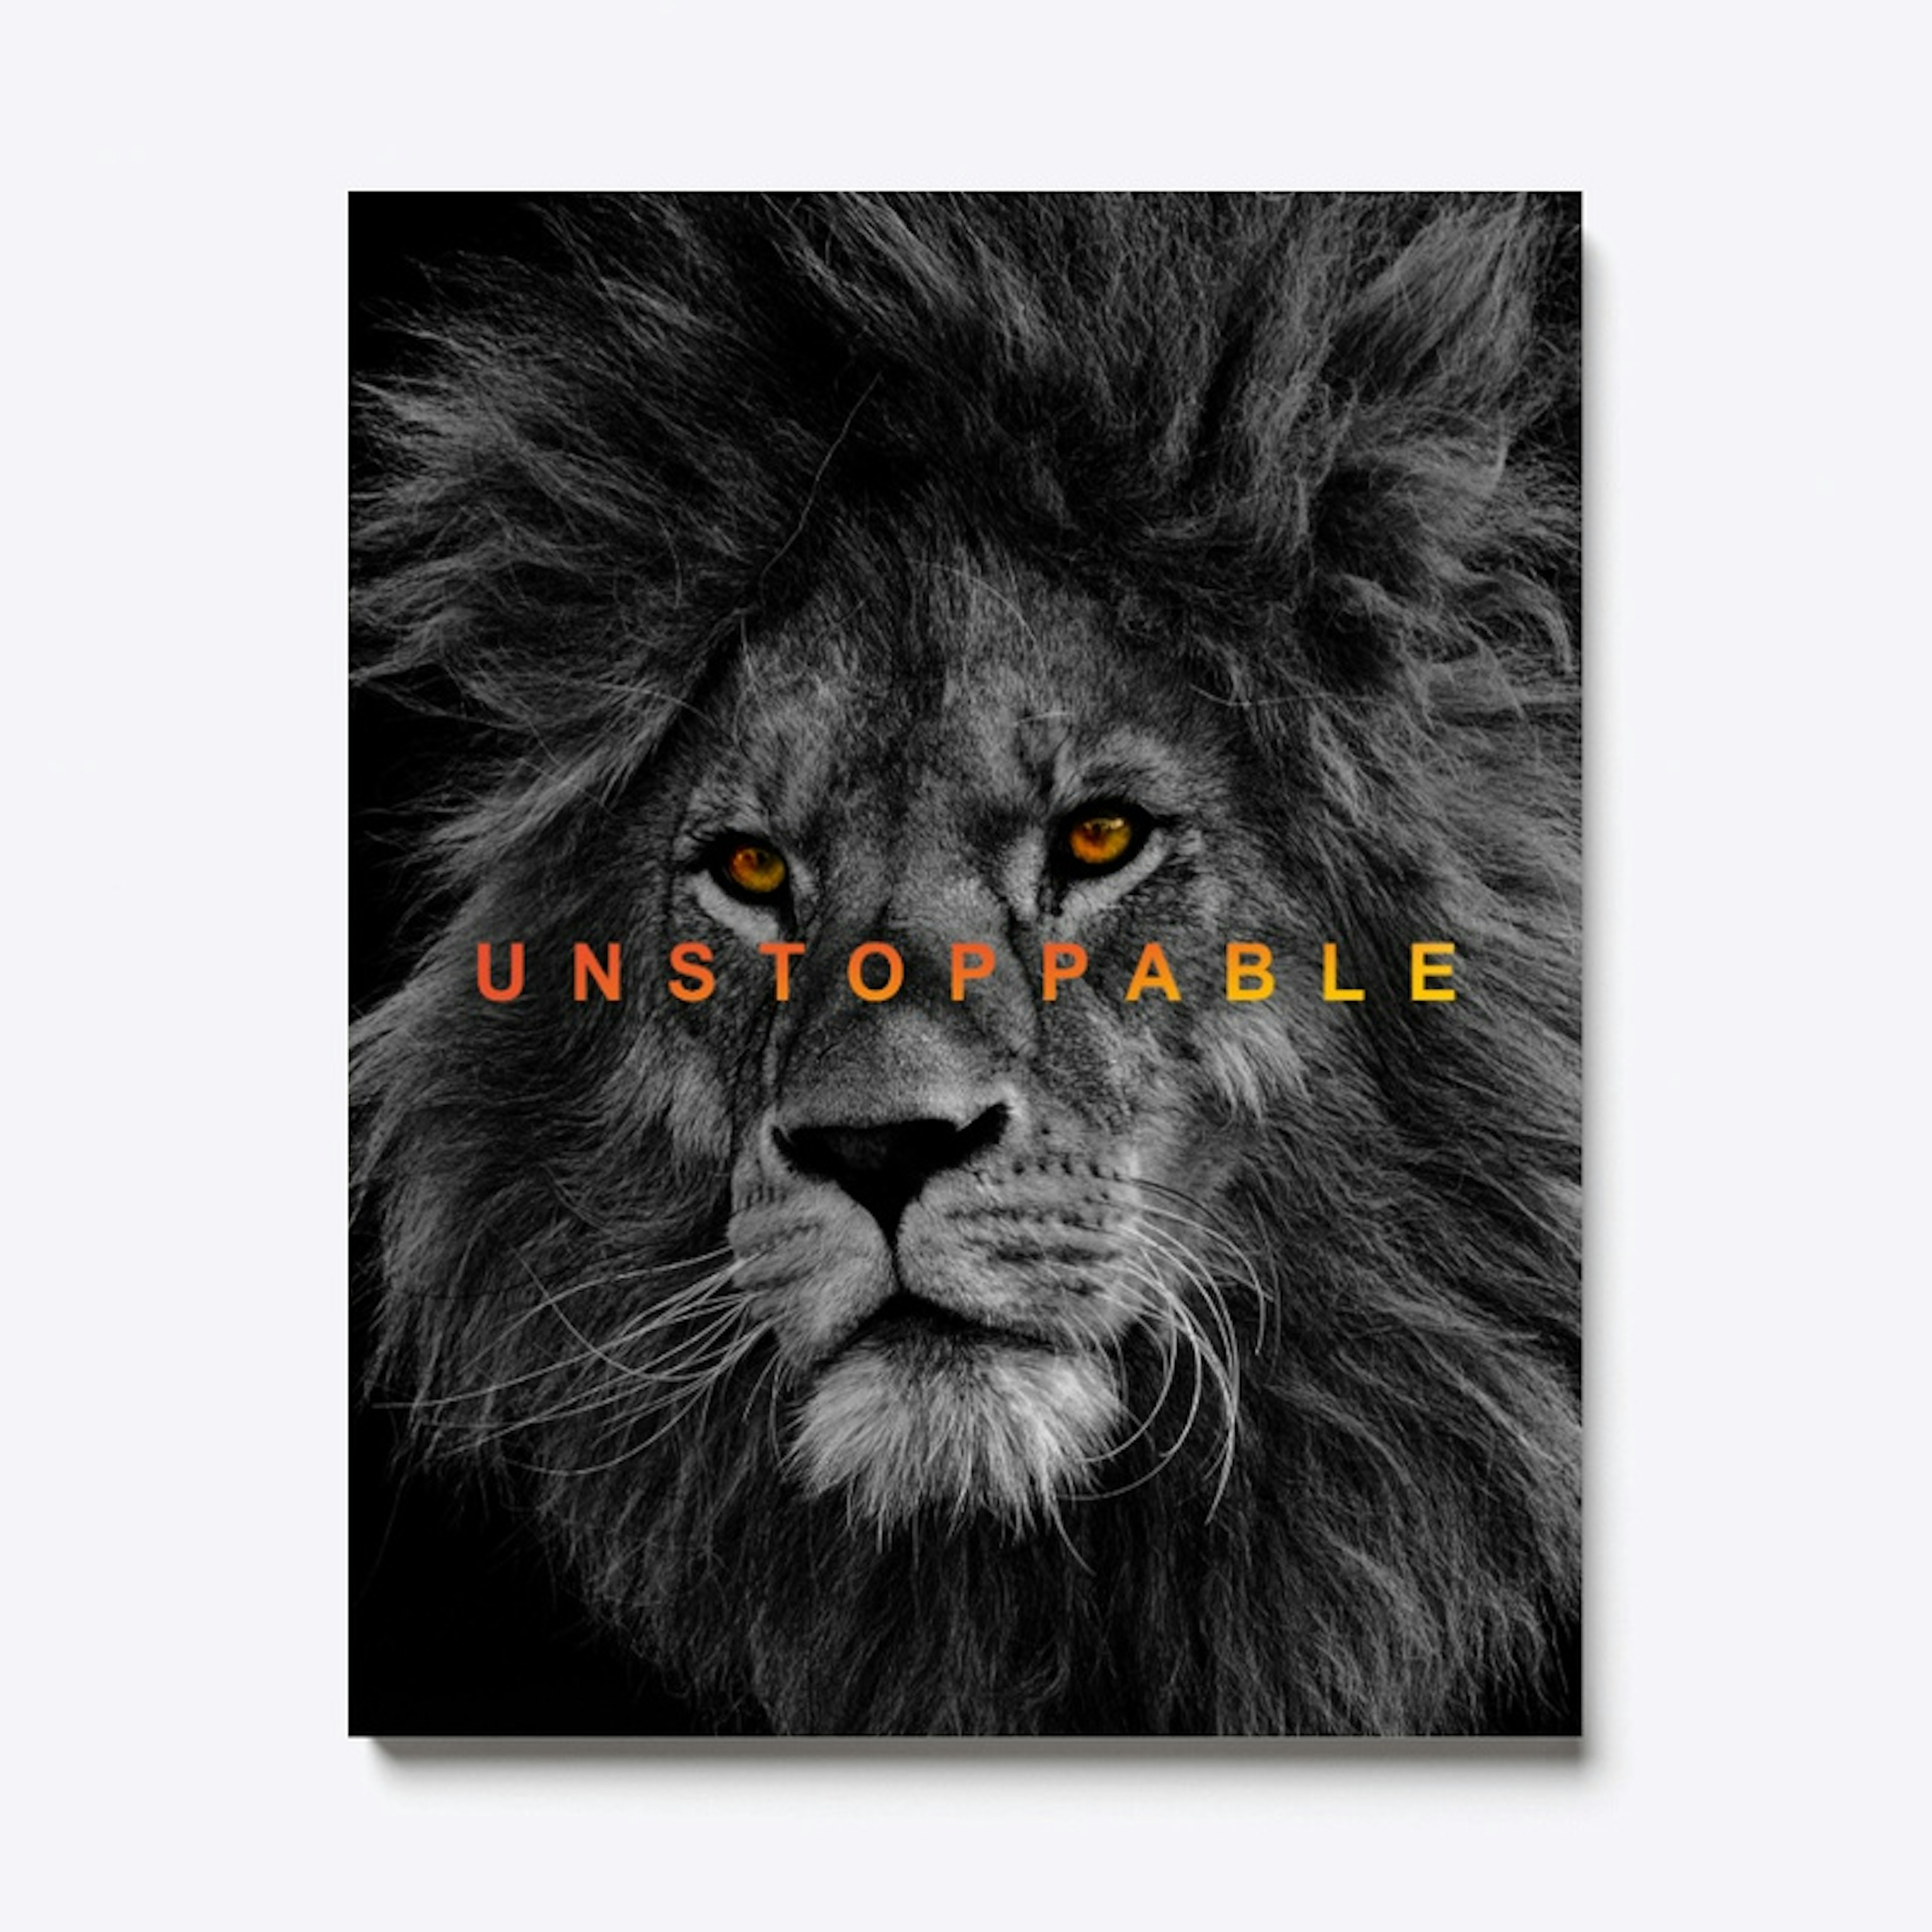 I am unstoppable - Motivational Poster